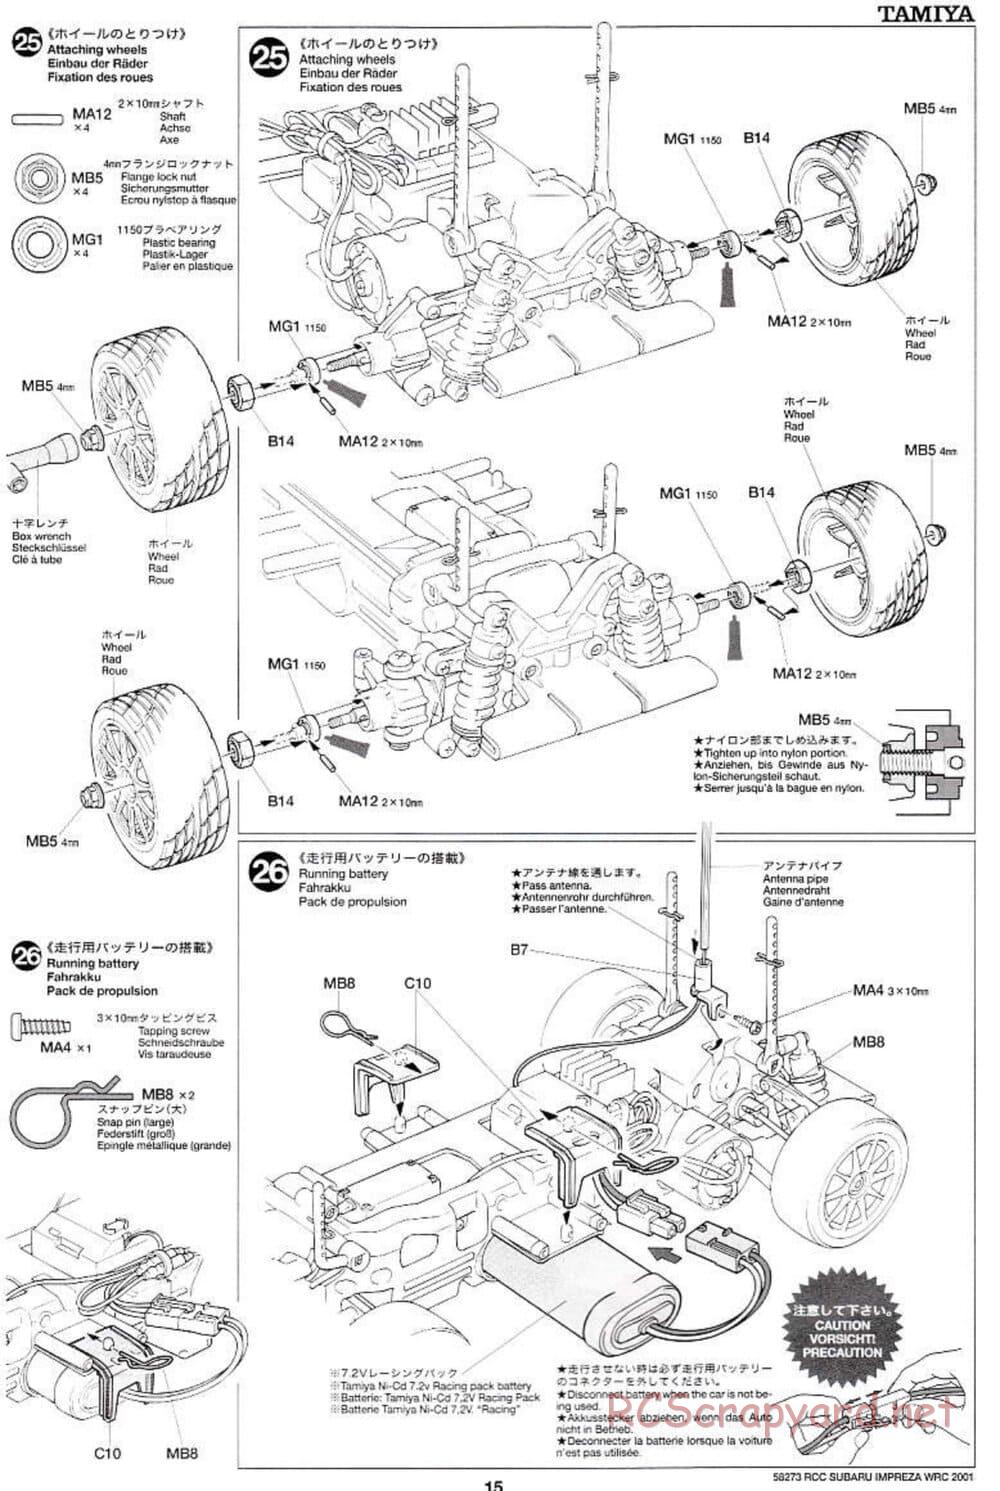 Tamiya - Subaru Impreza WRC 2001 - TL-01 Chassis - Manual - Page 15